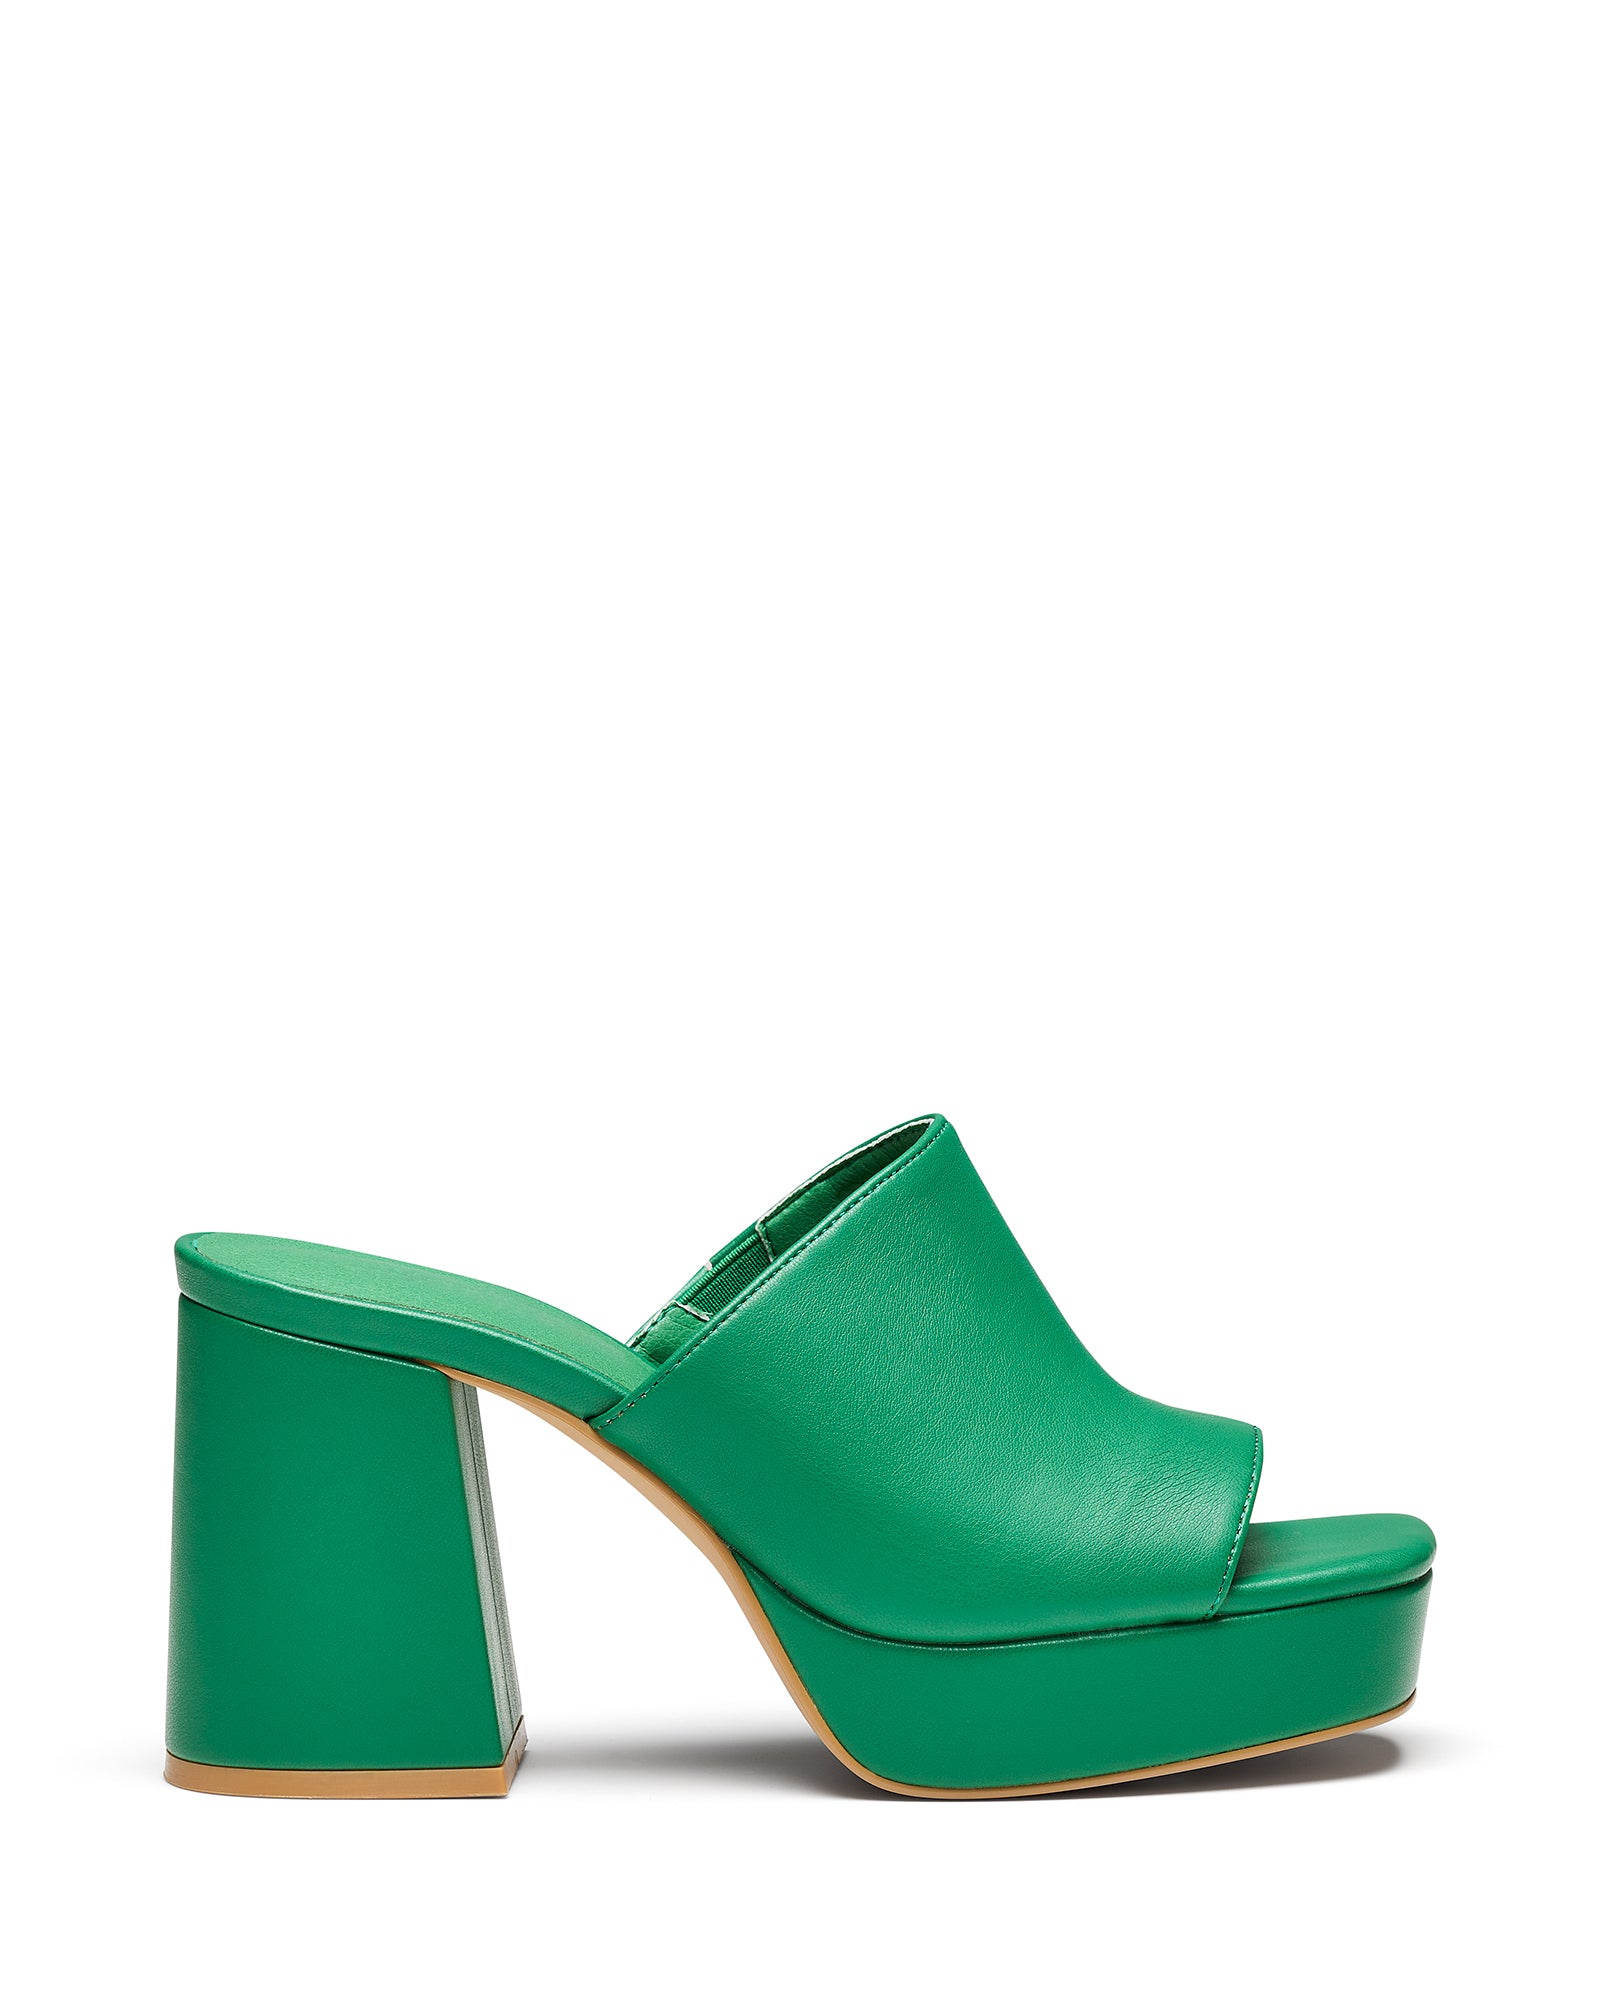 Therapy Shoes Arizona Fern | Women's Heels | Sandals | Platform | Mule